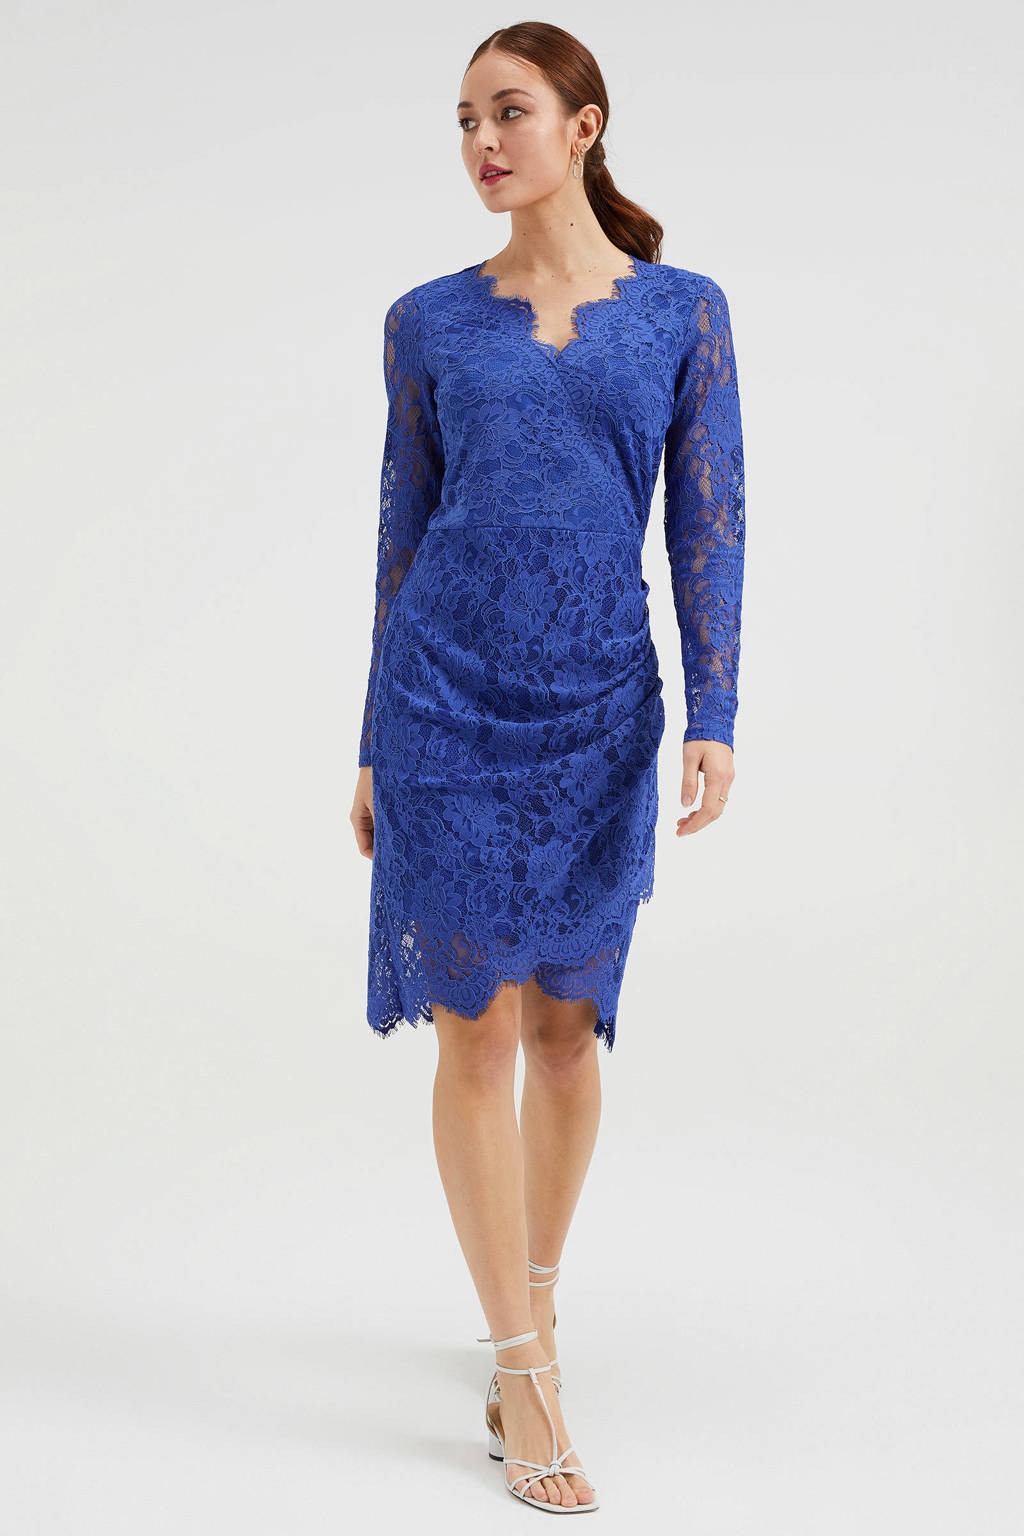 charme Alert leerling WE Fashion semi-transparante jurk met kant blauw | wehkamp